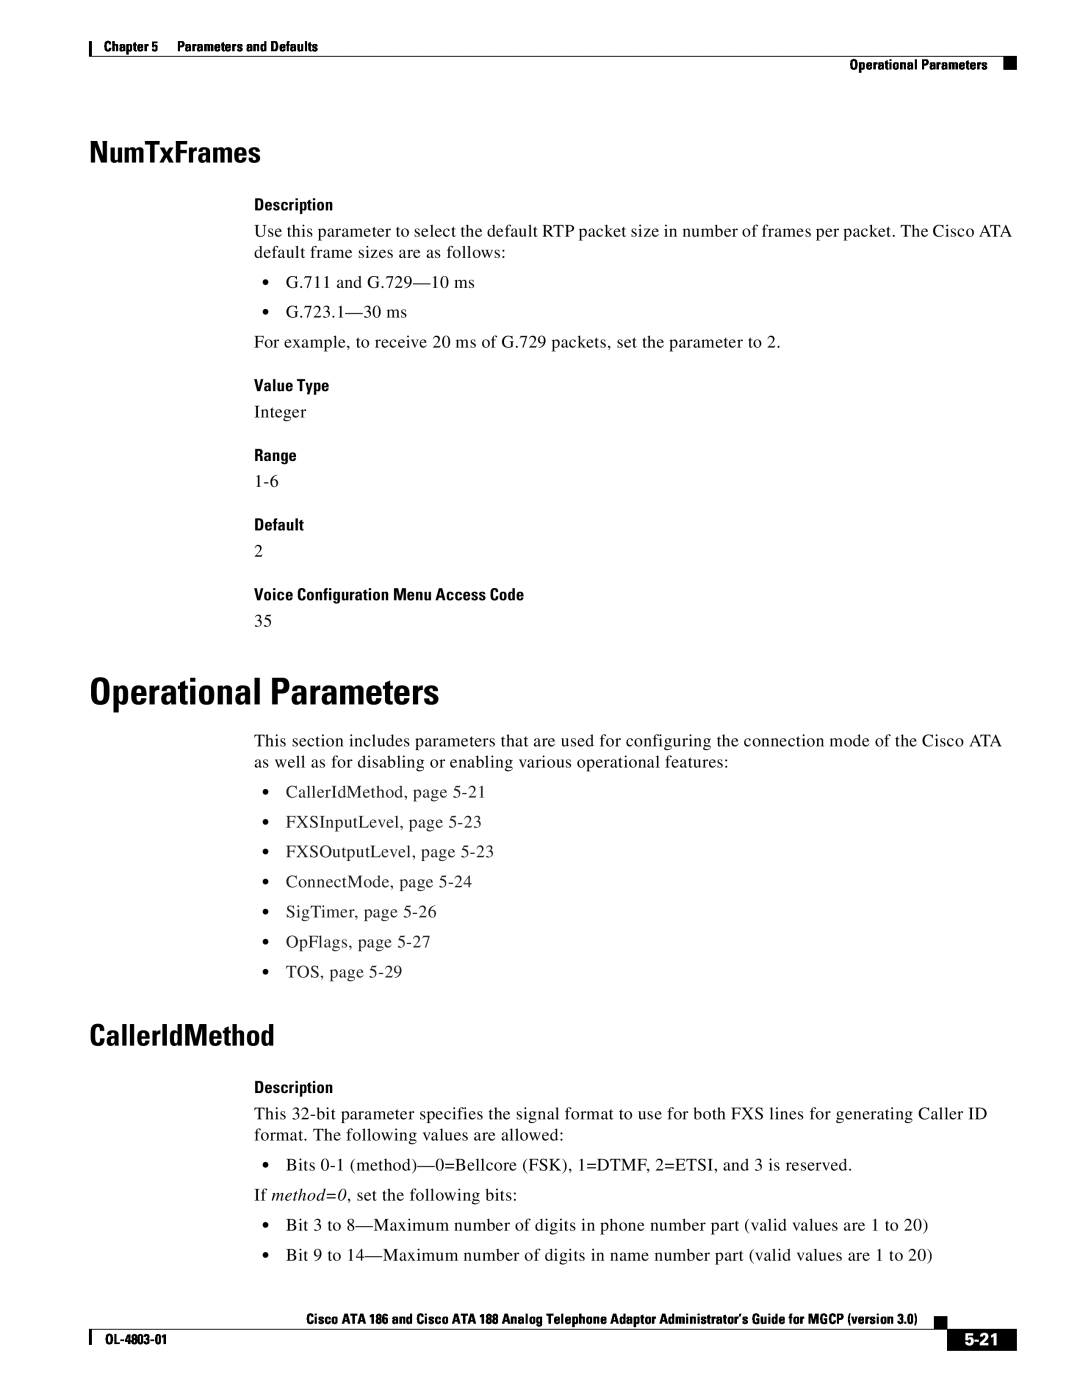 Cisco Systems ATA 186 Operational Parameters, NumTxFrames, CallerIdMethod, 5-21, Description, Value Type, Range, Default 